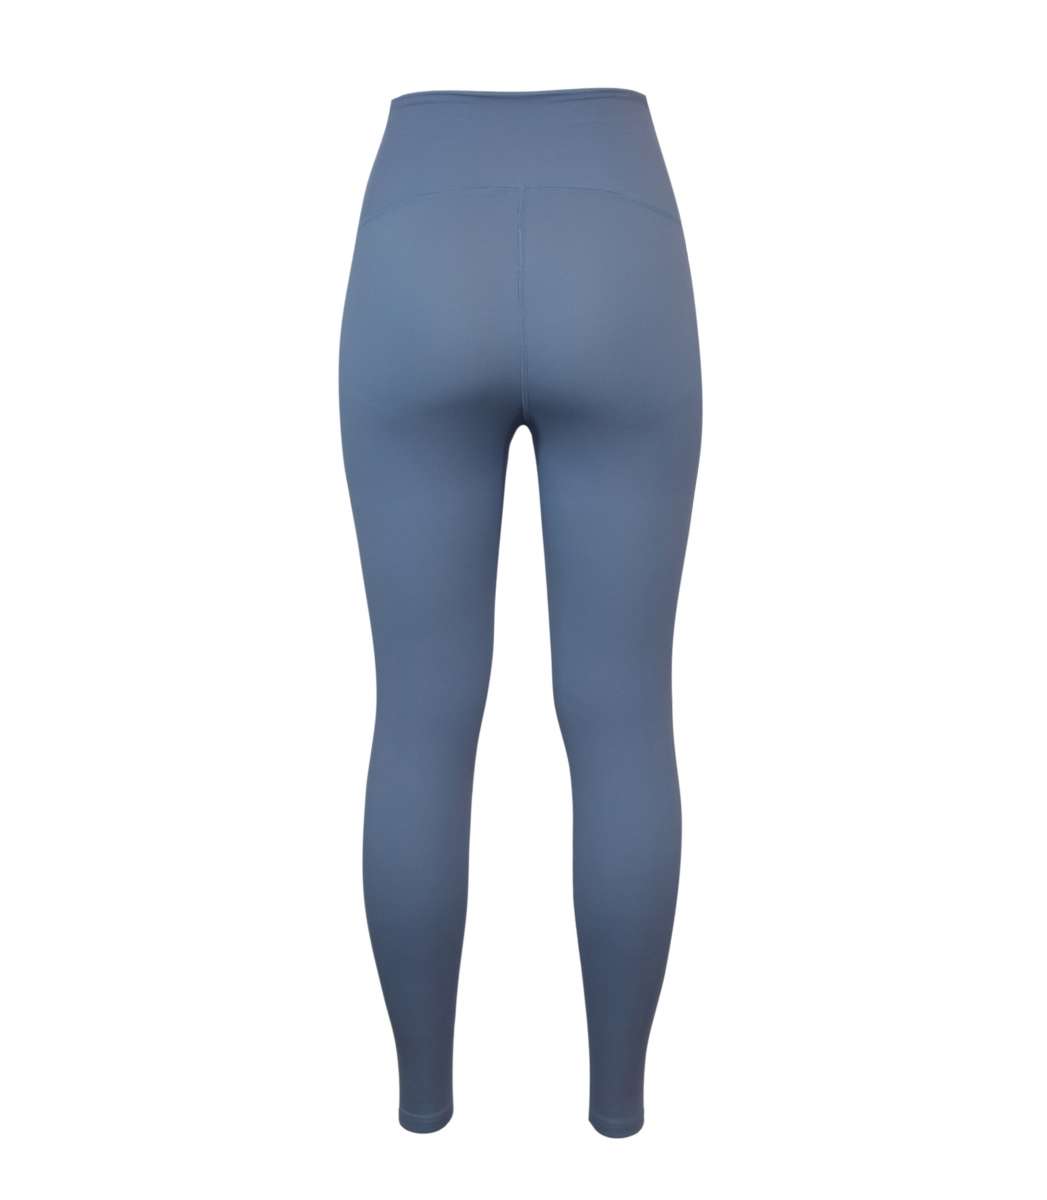 UV Leggings ‘vintage grey‘ back view 